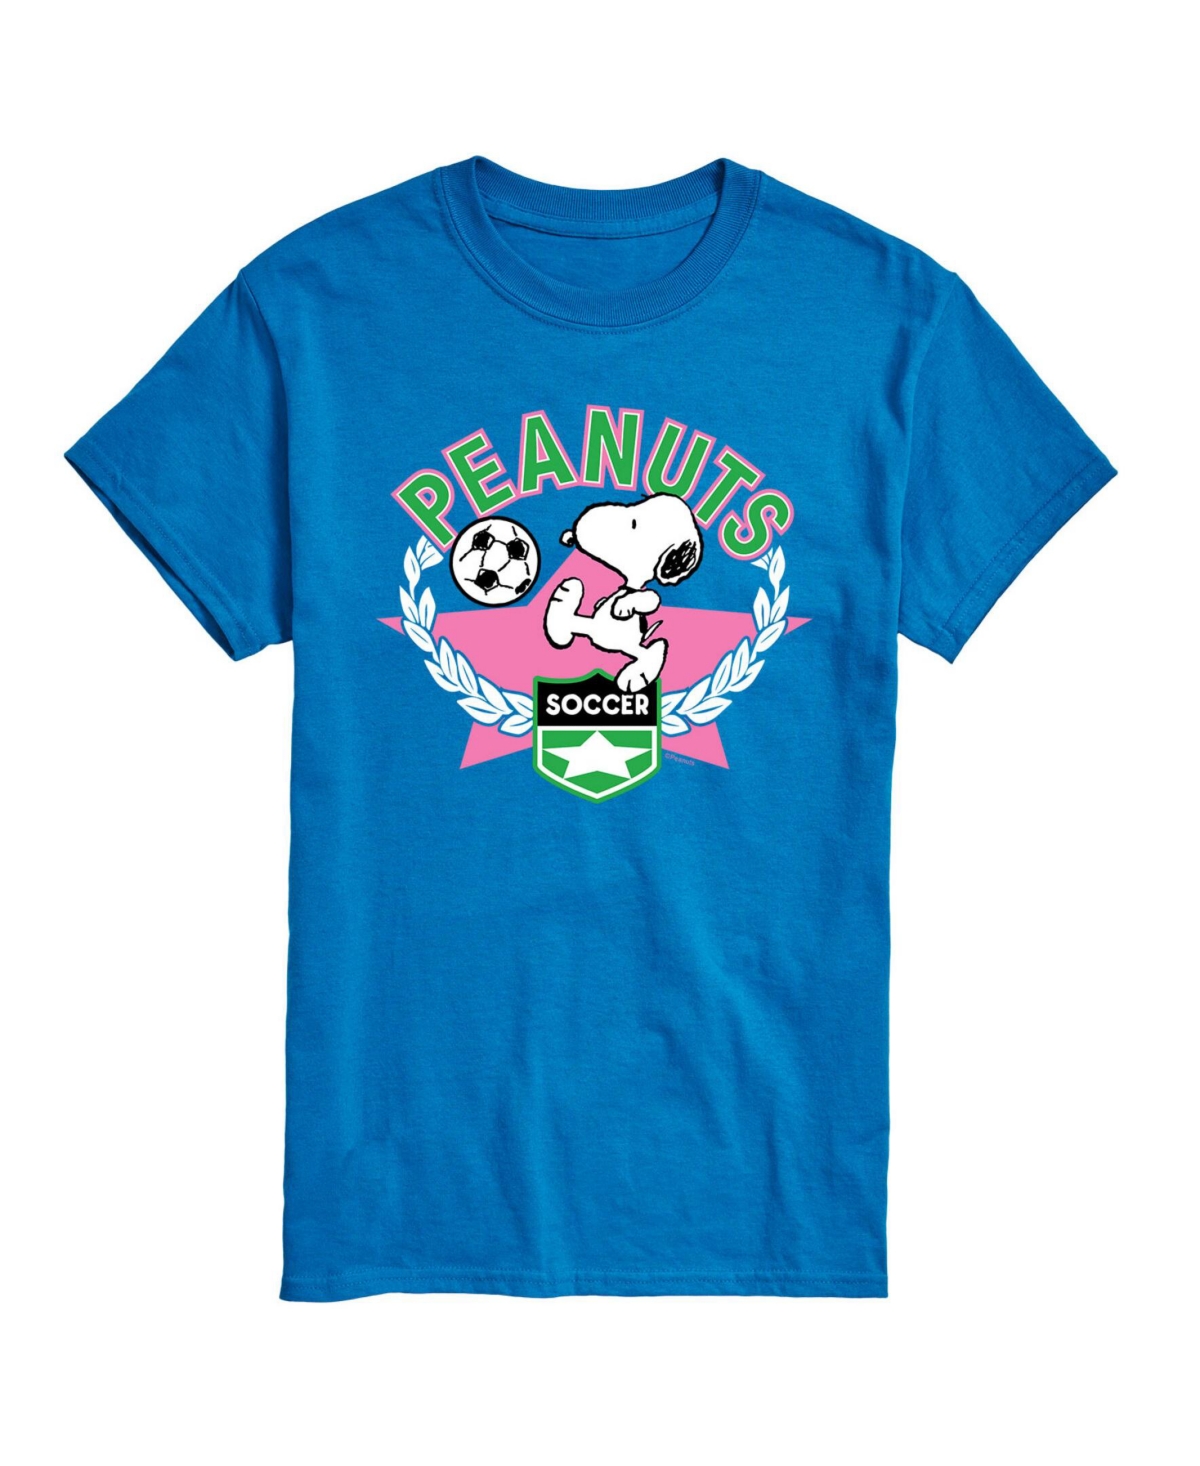 Airwaves Men's Peanuts Soccer T-shirt In Blue